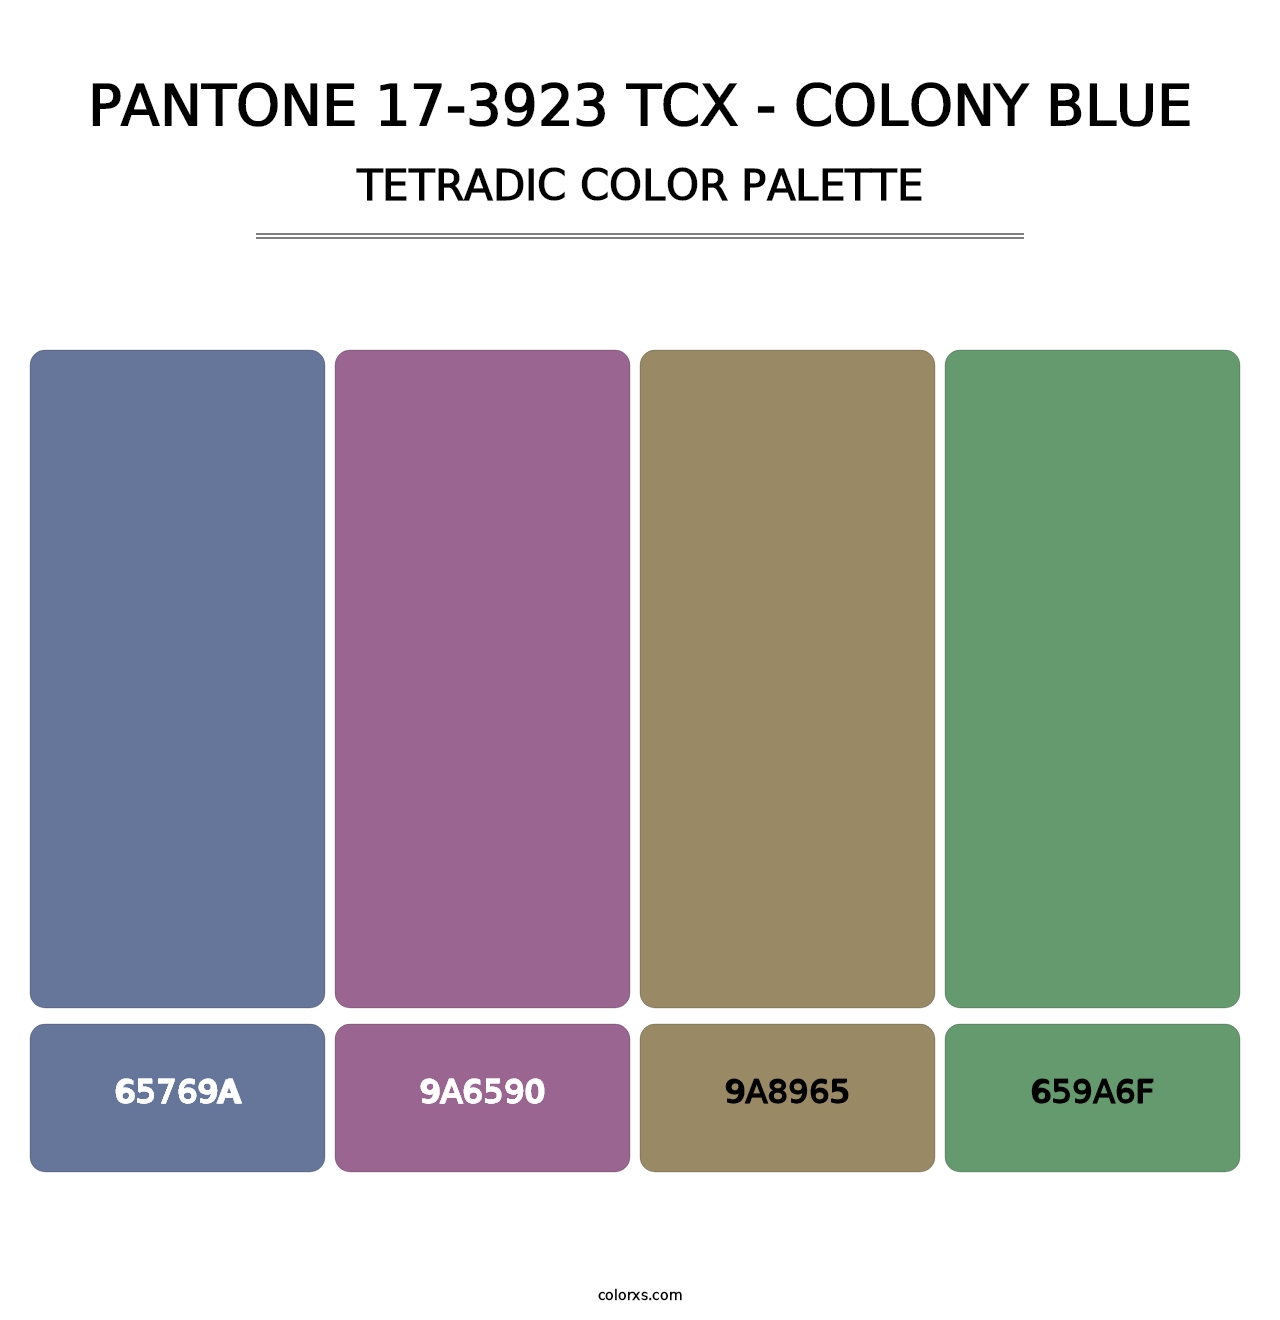 PANTONE 17-3923 TCX - Colony Blue - Tetradic Color Palette